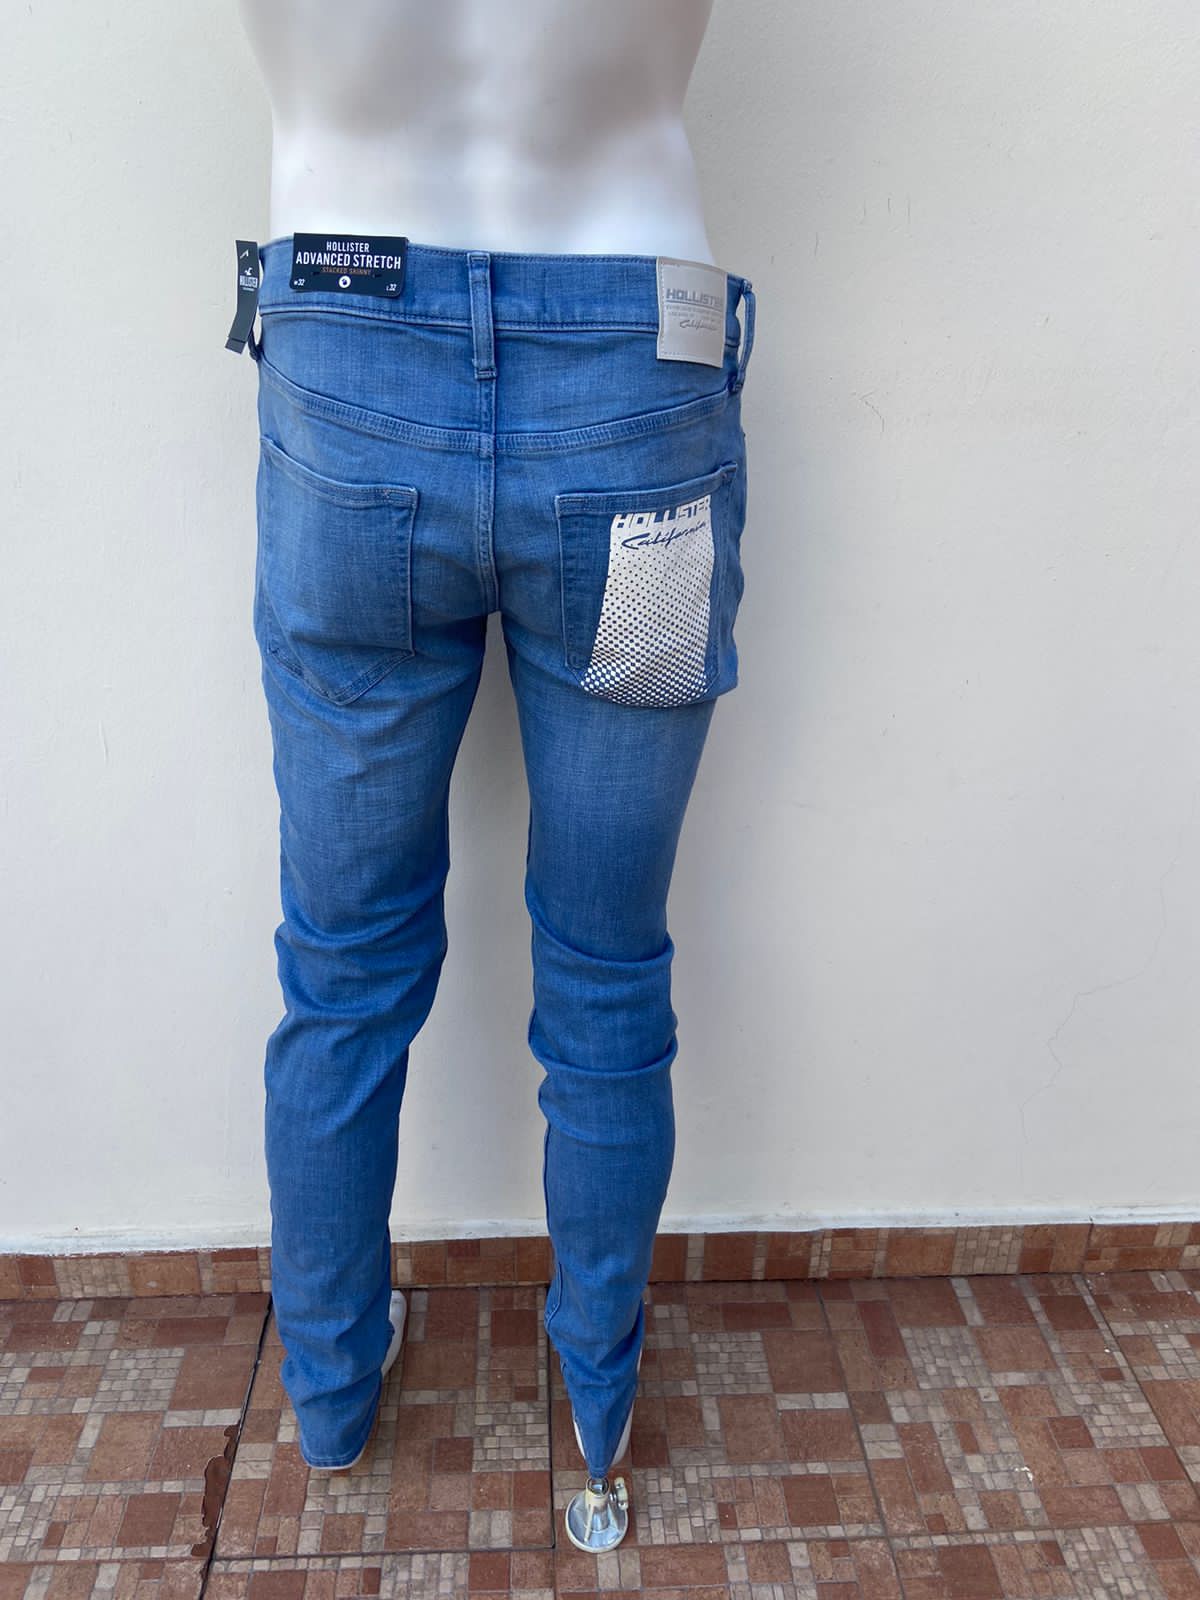 Pantalon jeans Hollister original azul claro con rasgados al frente y diseño de letra HOLLISTER CALIFORNIA en la parte de atrás con recuadro blanco ADVANCE STRETCH STACKED SKINNY